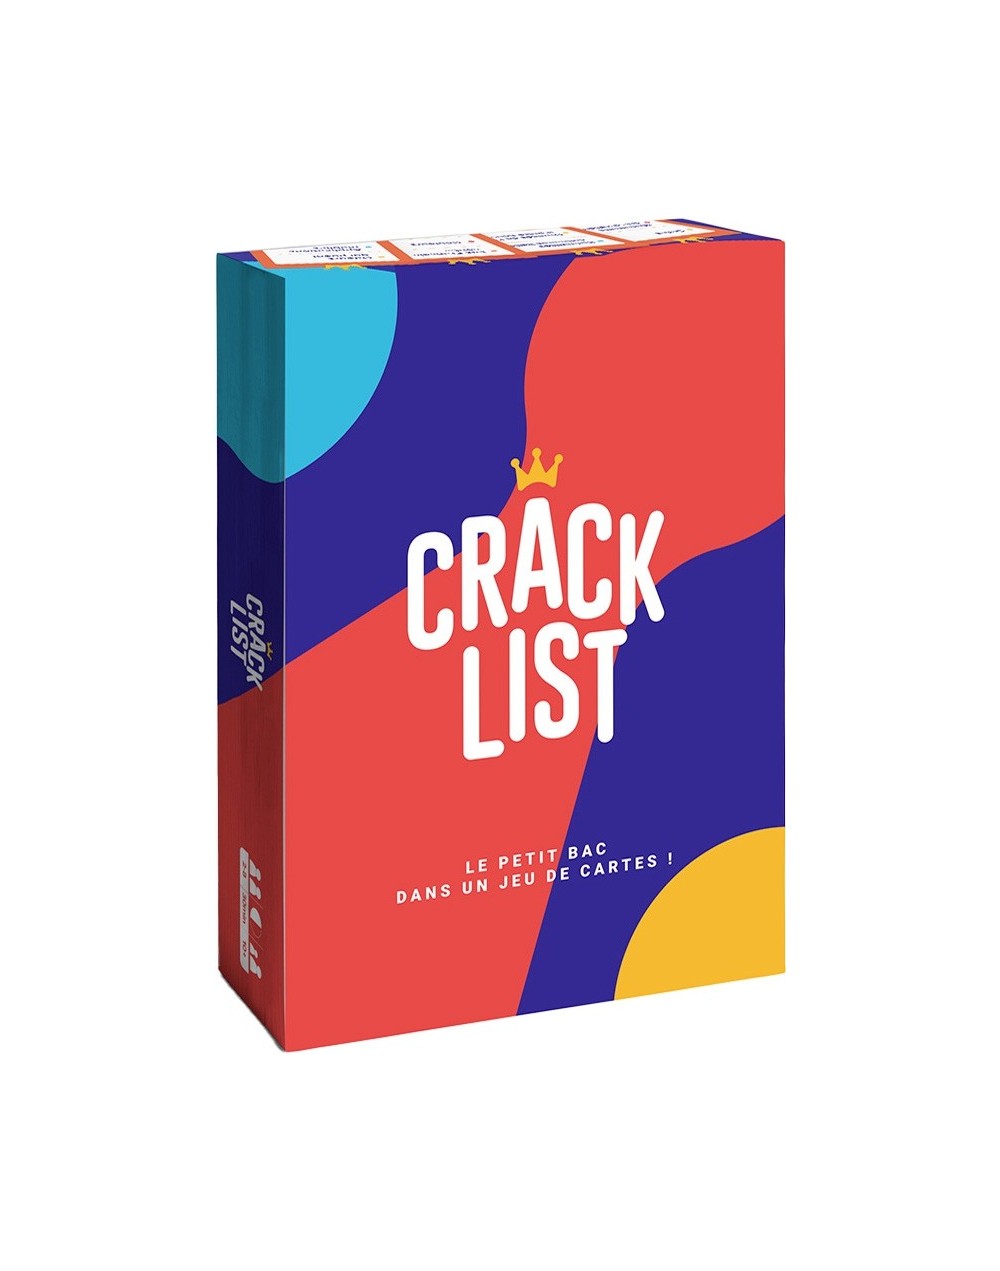 Crack list